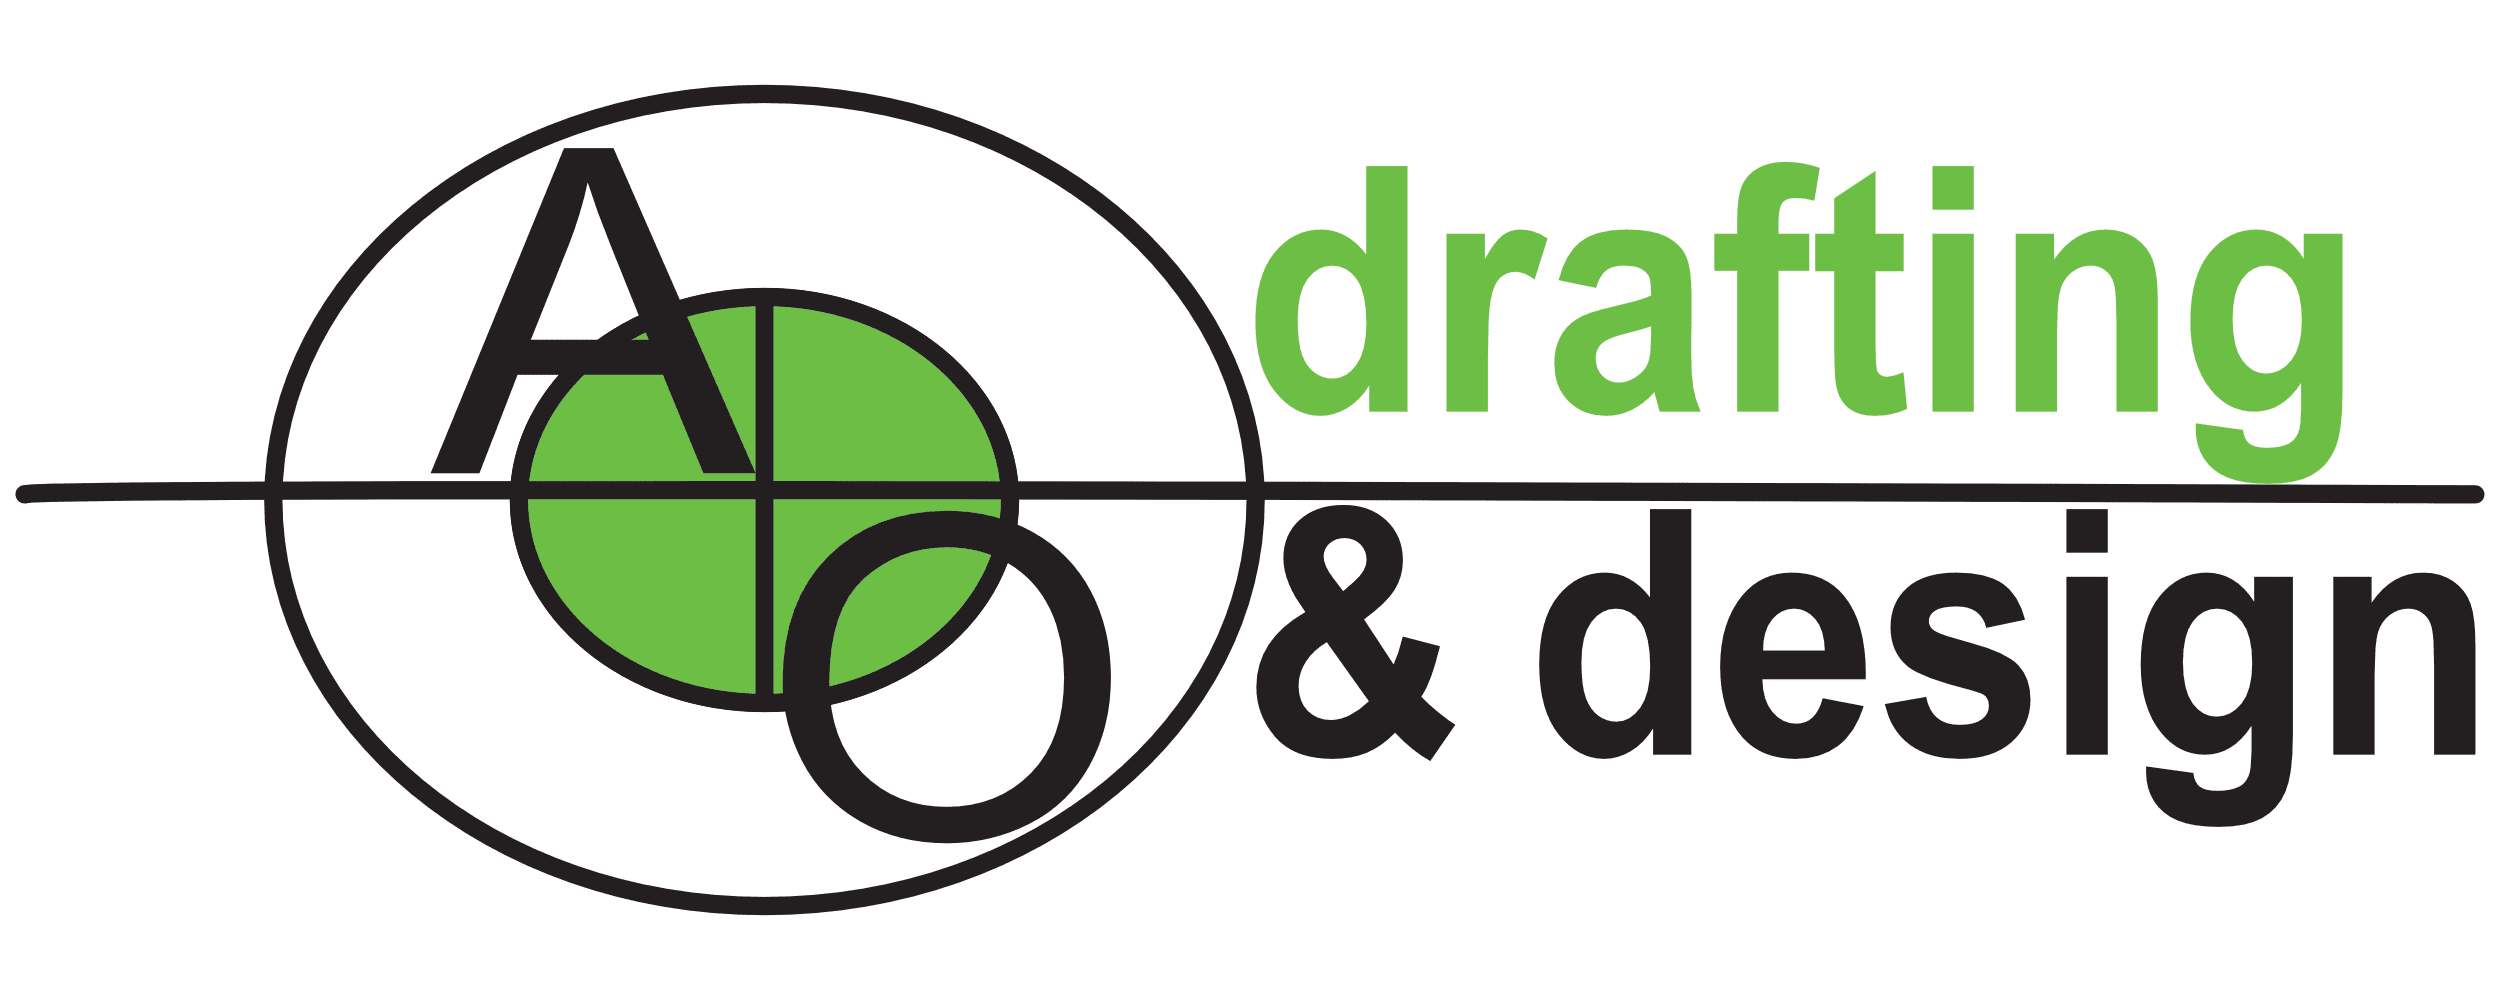 AO Drafting and Design